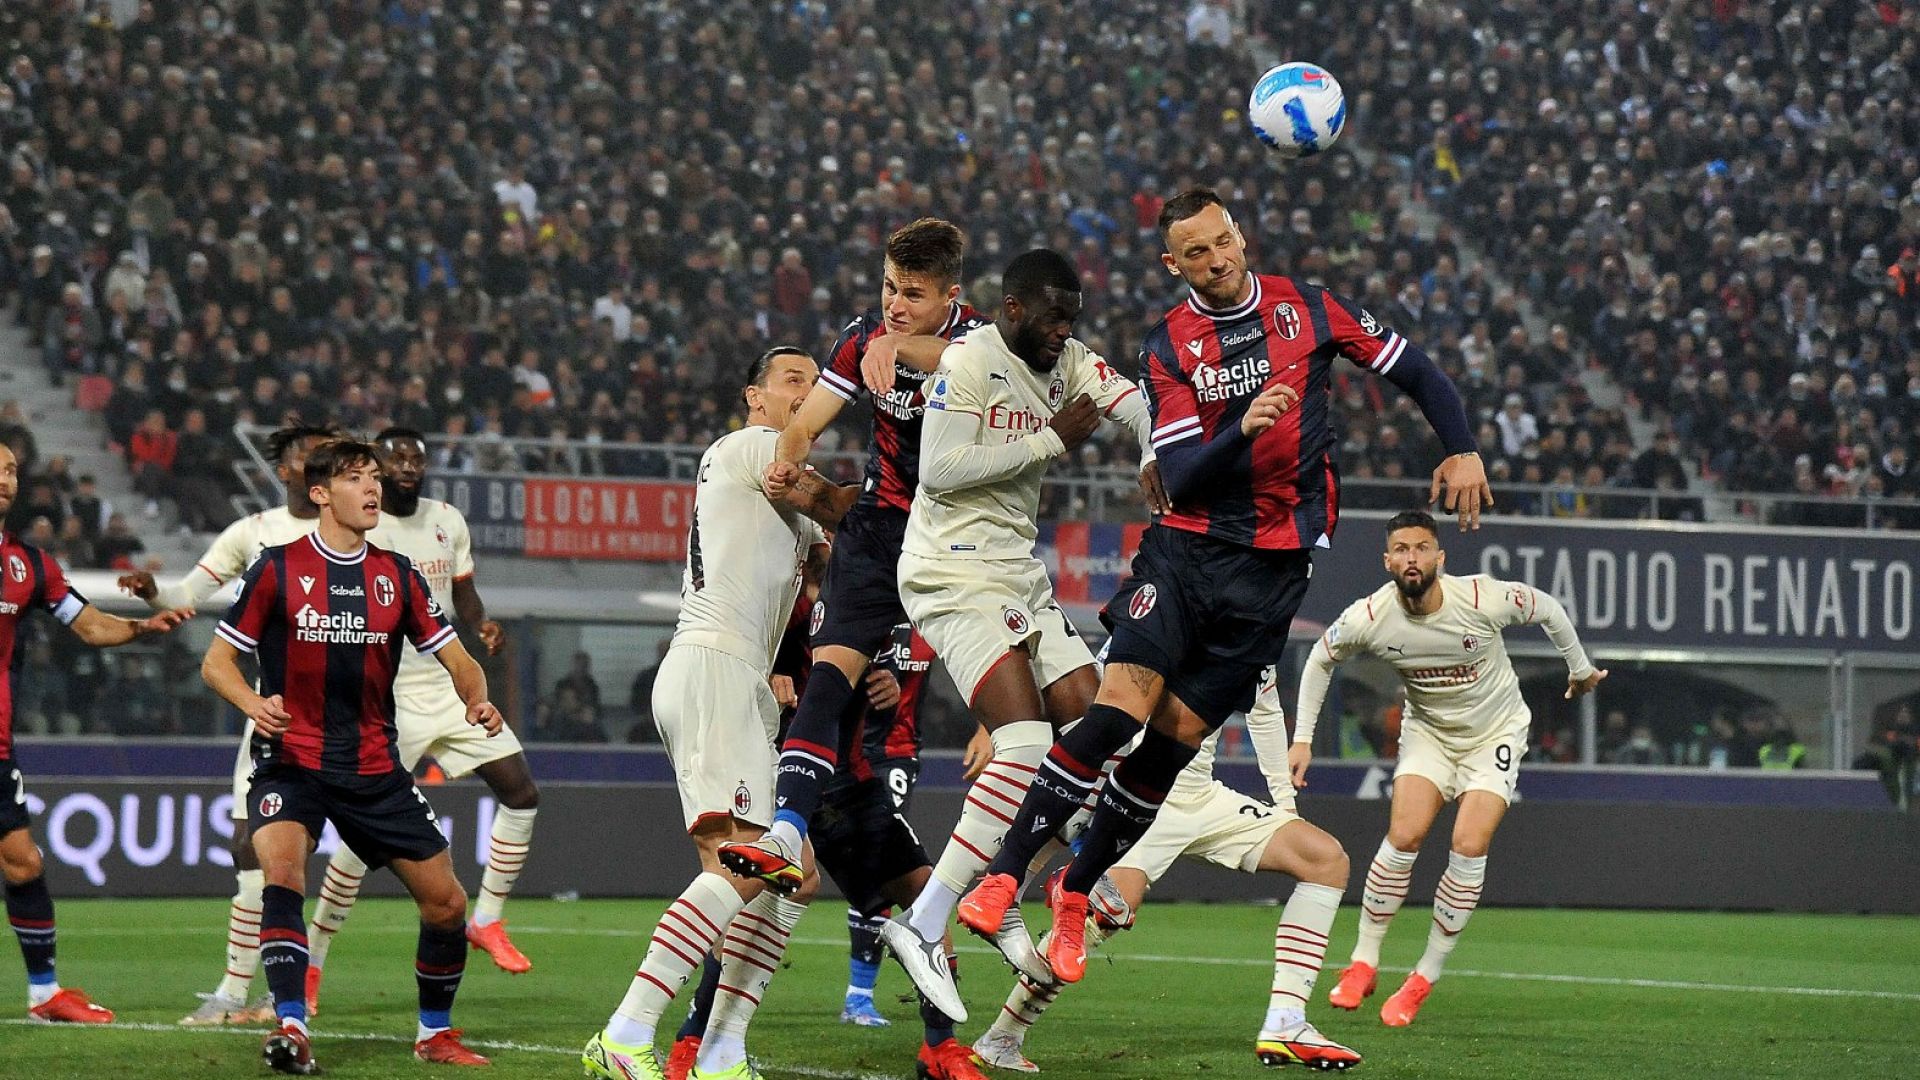 Милан без драма не може - "росонерите" почти се издъниха срещу деветима